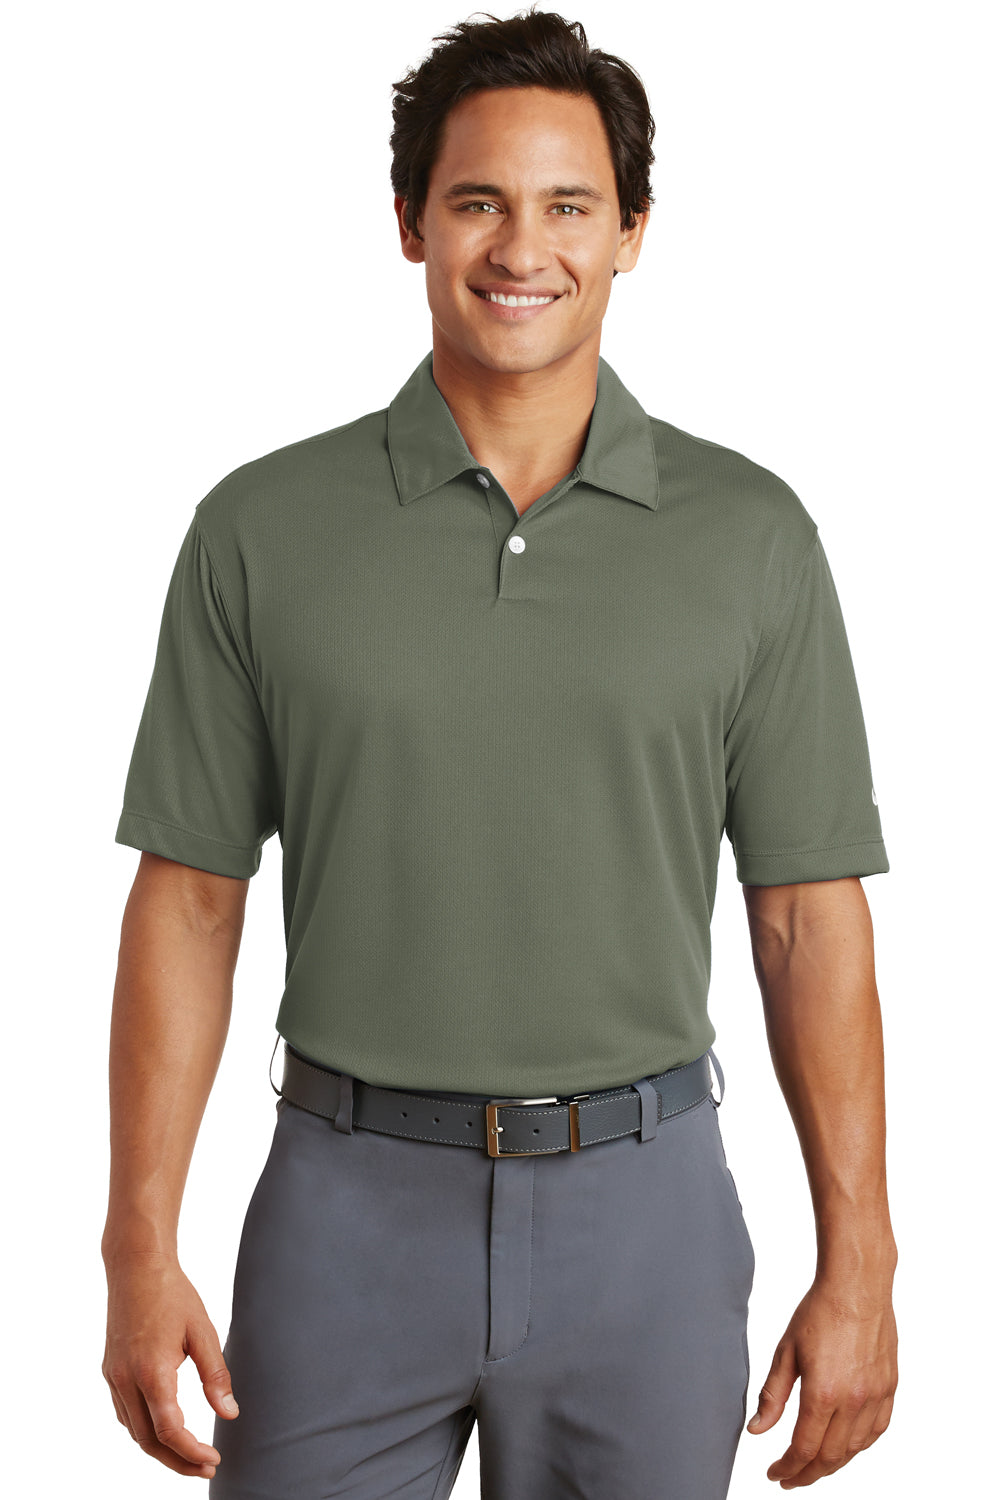 Nike 373749 Mens Dri-Fit Moisture Wicking Short Sleeve Polo Shirt Lichen Green Front